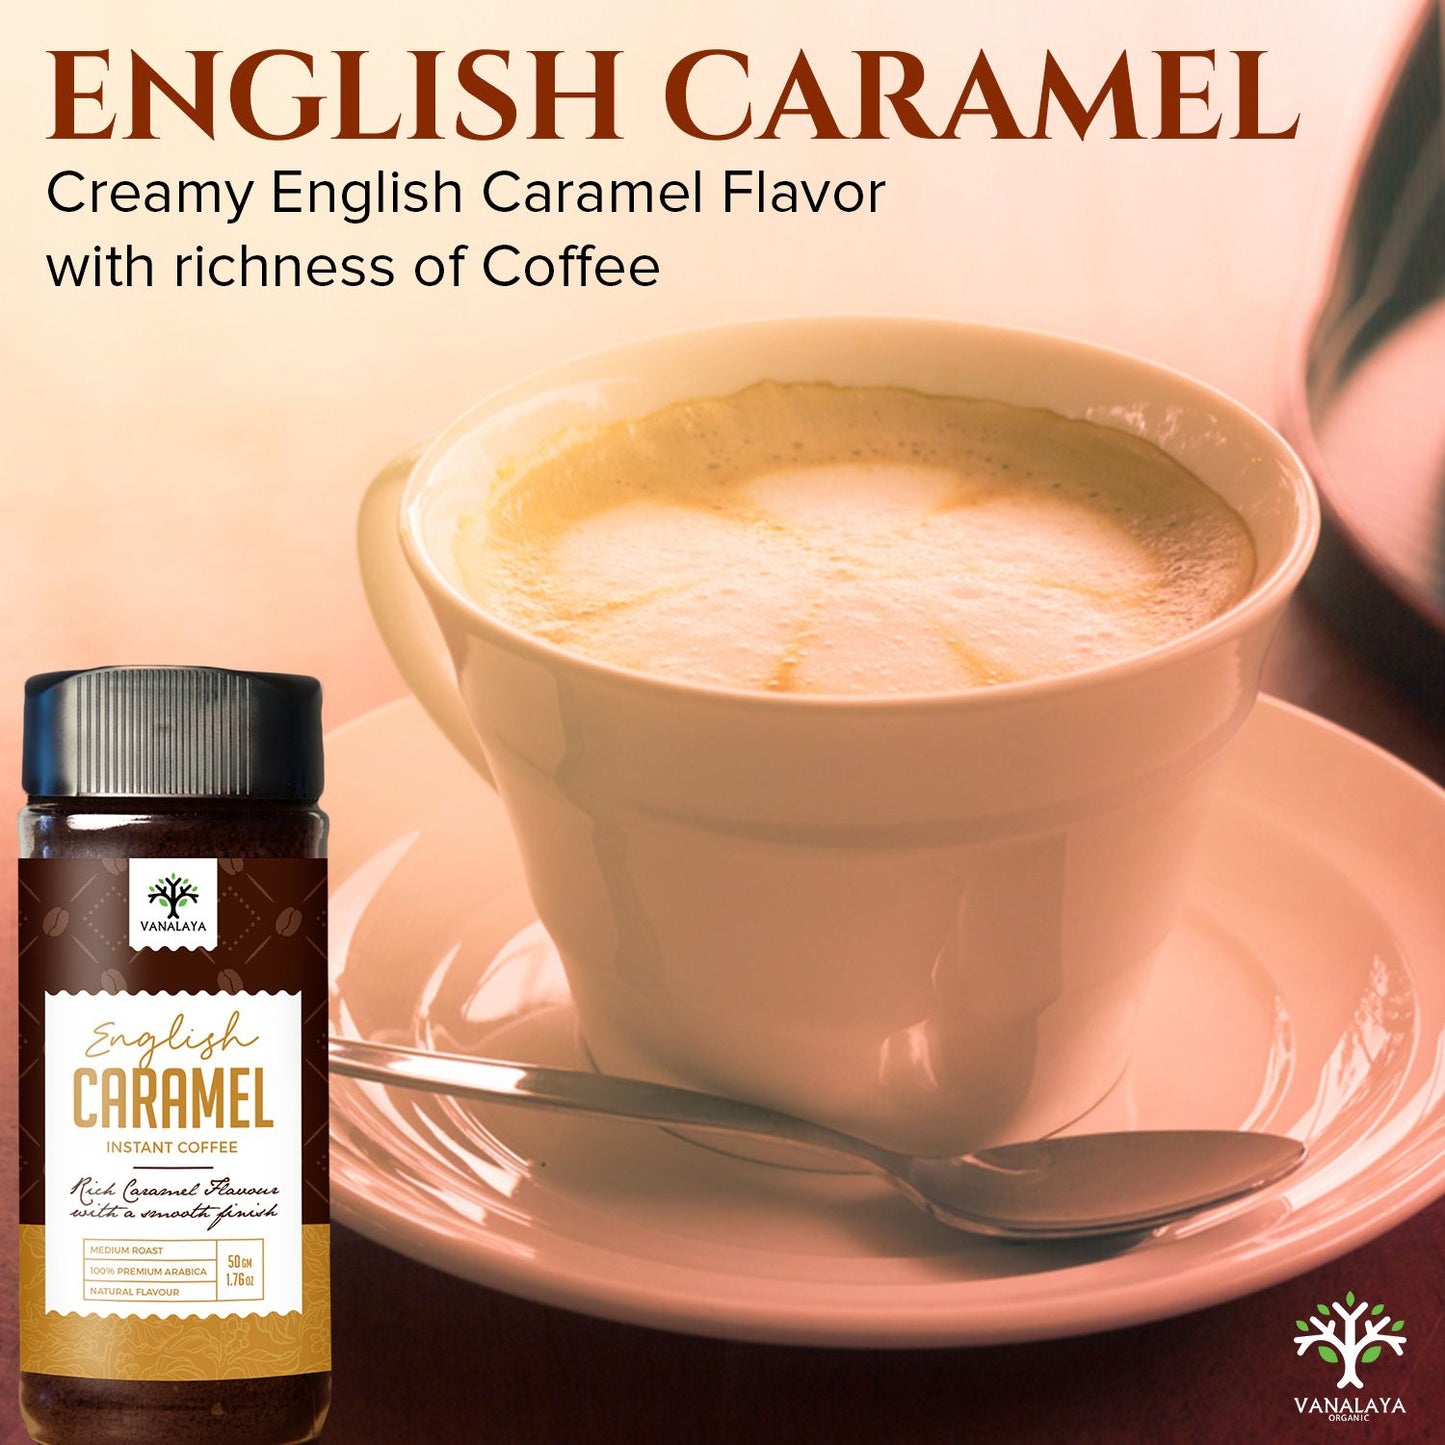 
                  
                    Vanalaya English Caramel Instant Coffee Caramel Flavour (Pack of 2) - 50g
                  
                